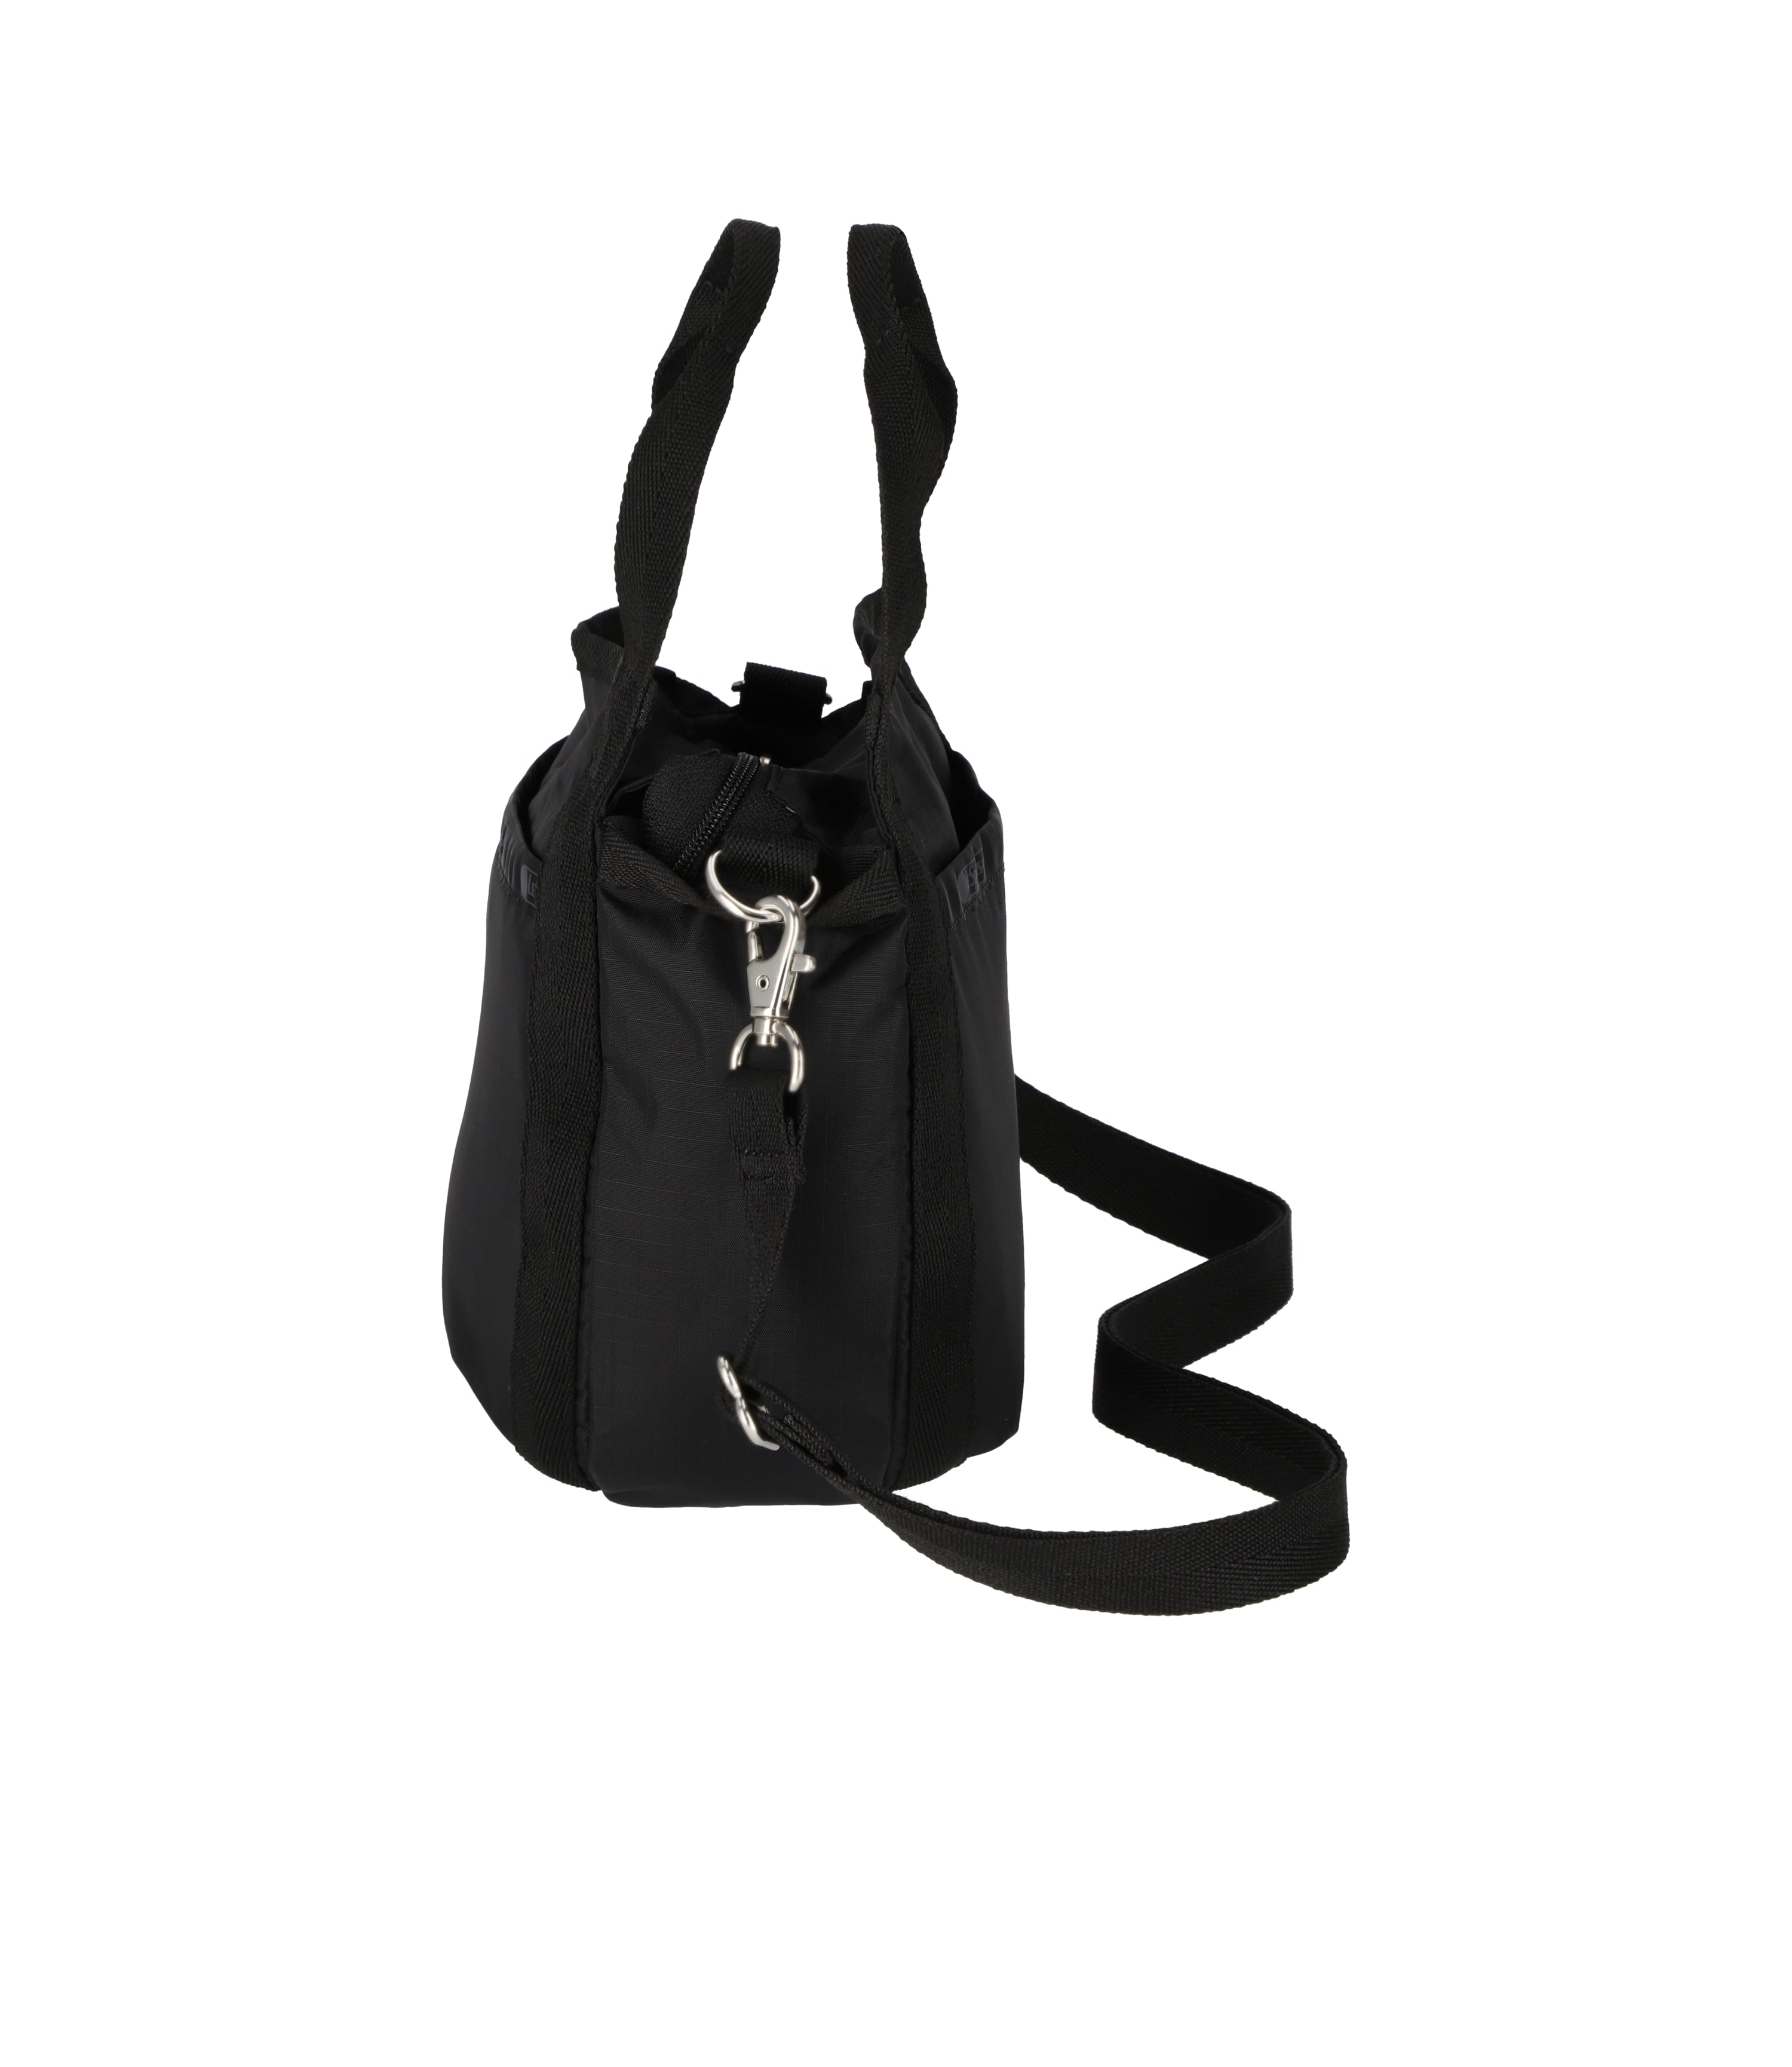 Genuine Leather crossbody Bag, Red Monkey Purse,a Unique Small Satchel.:  Handbags: Amazon.com